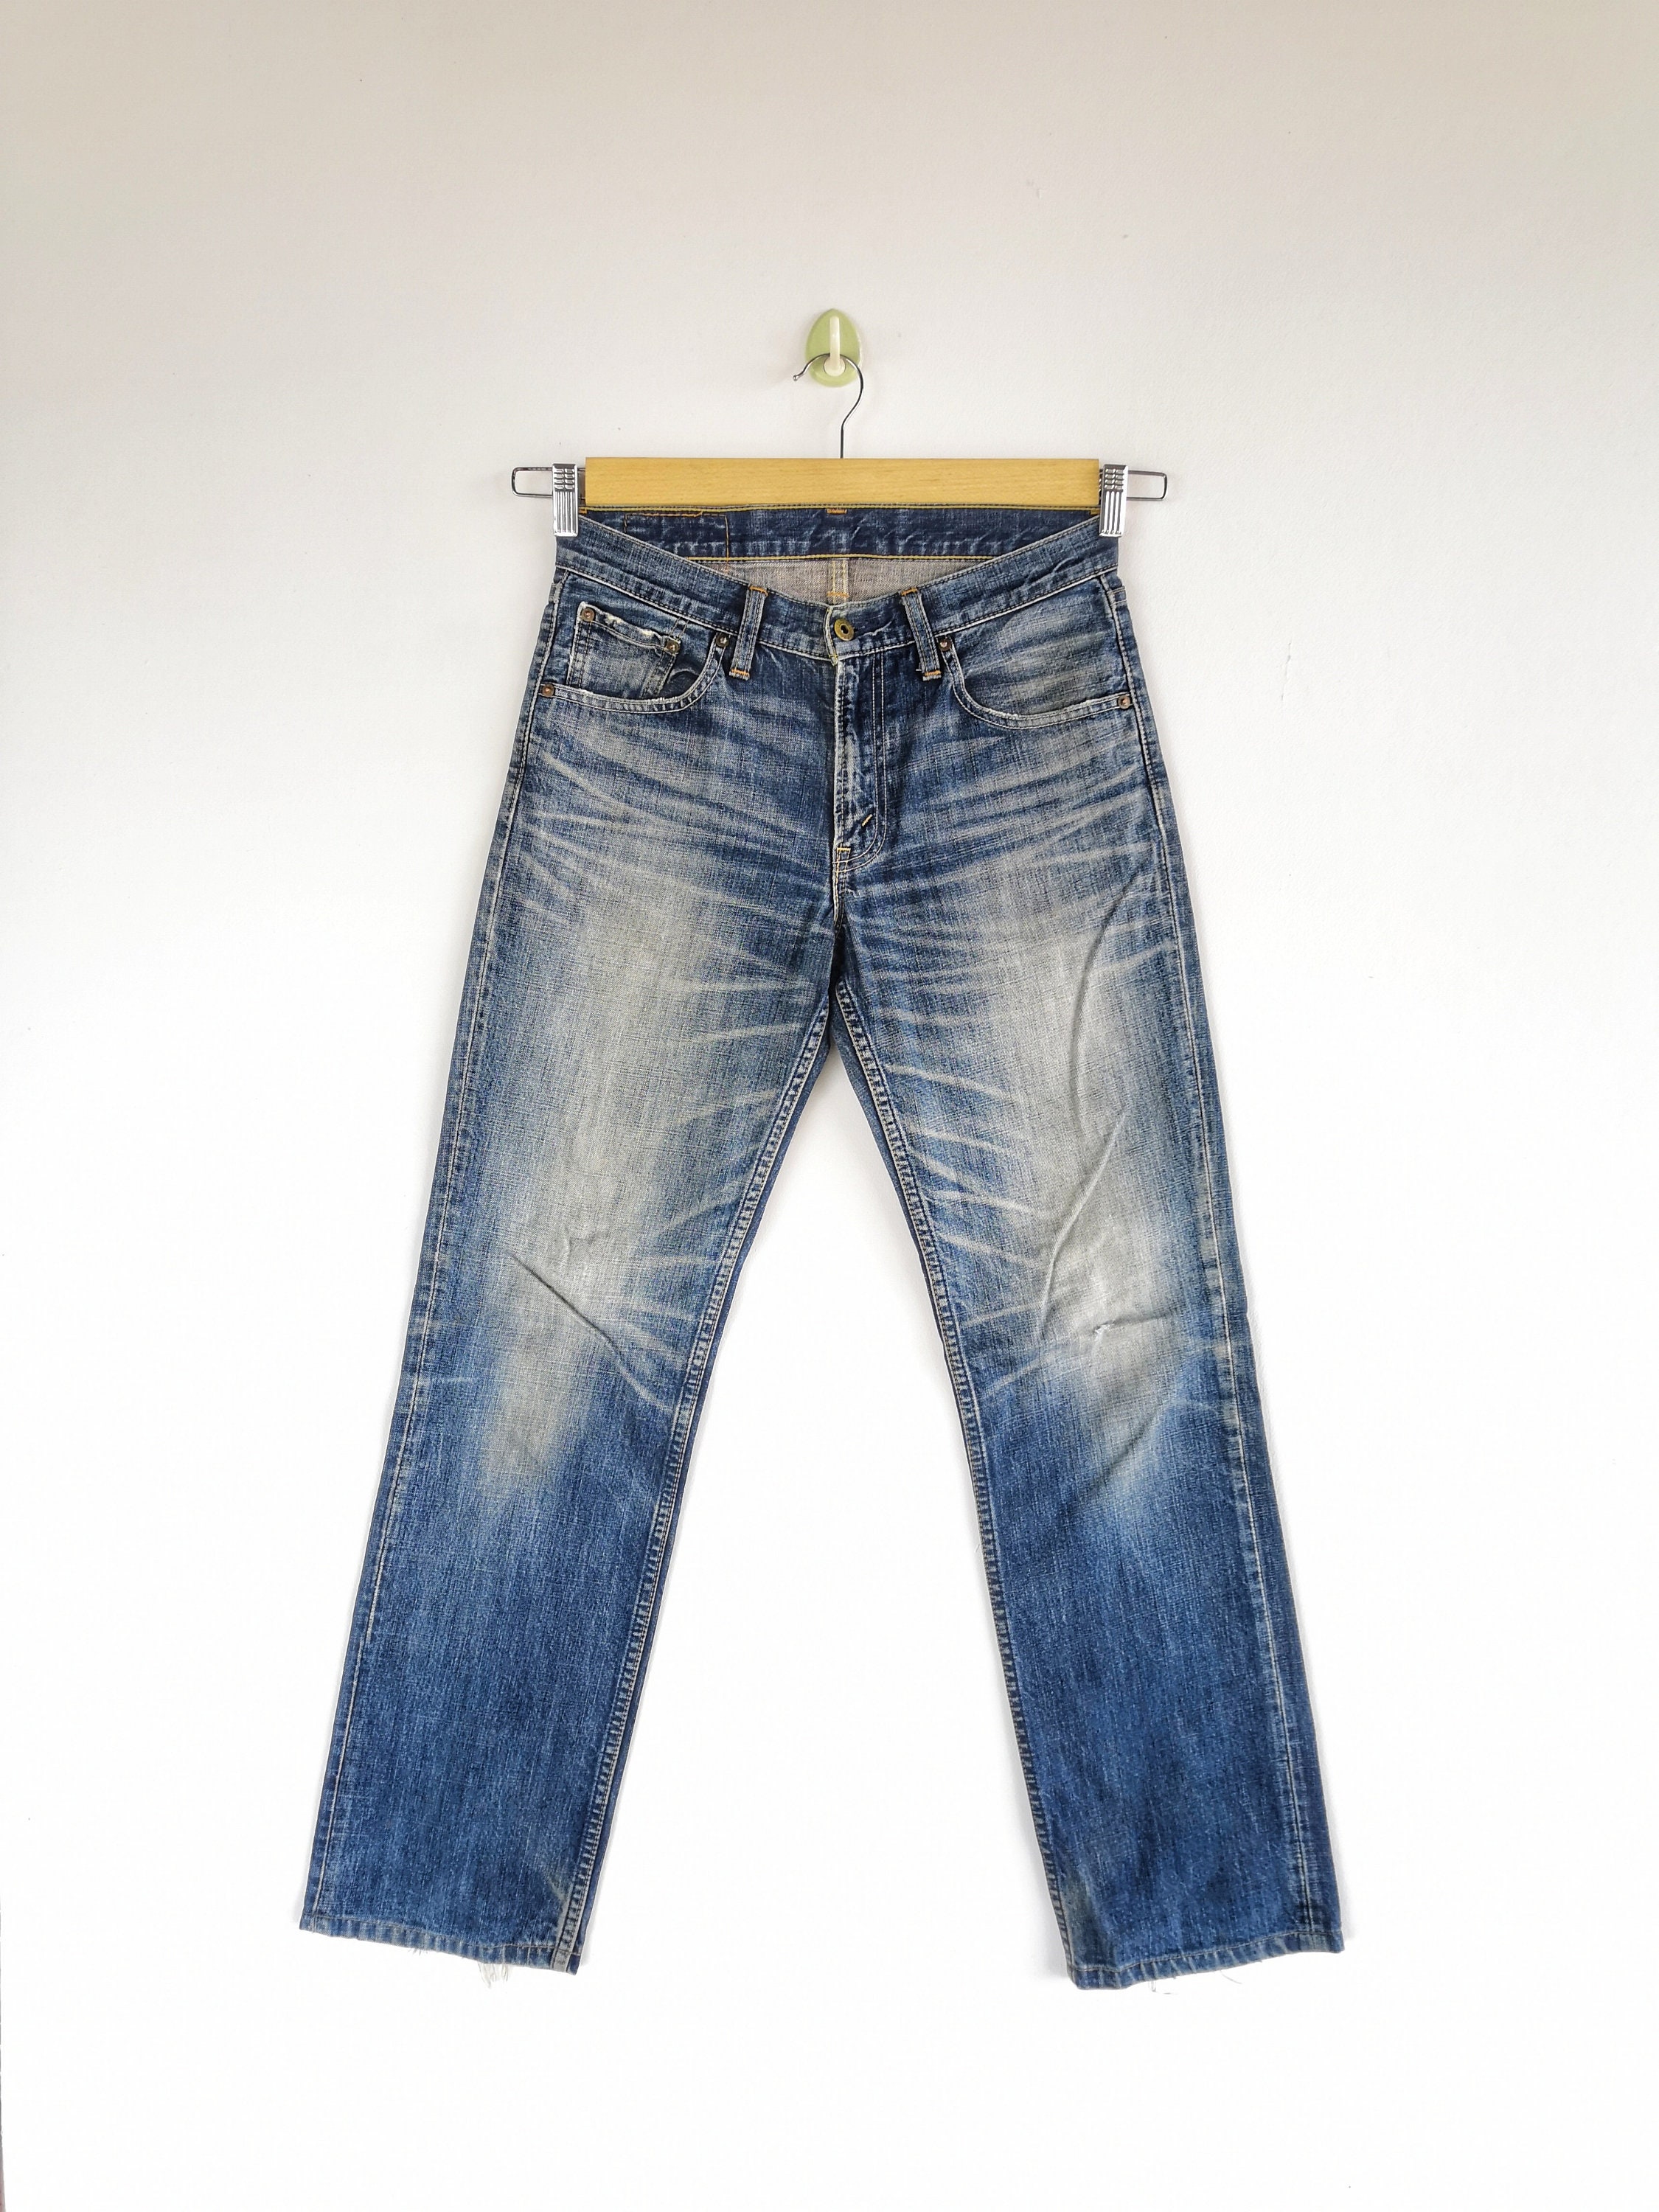 Buy Rusty Vintage Levis 502 Jeans Denim Pants Levi High Waist Online in  India - Etsy